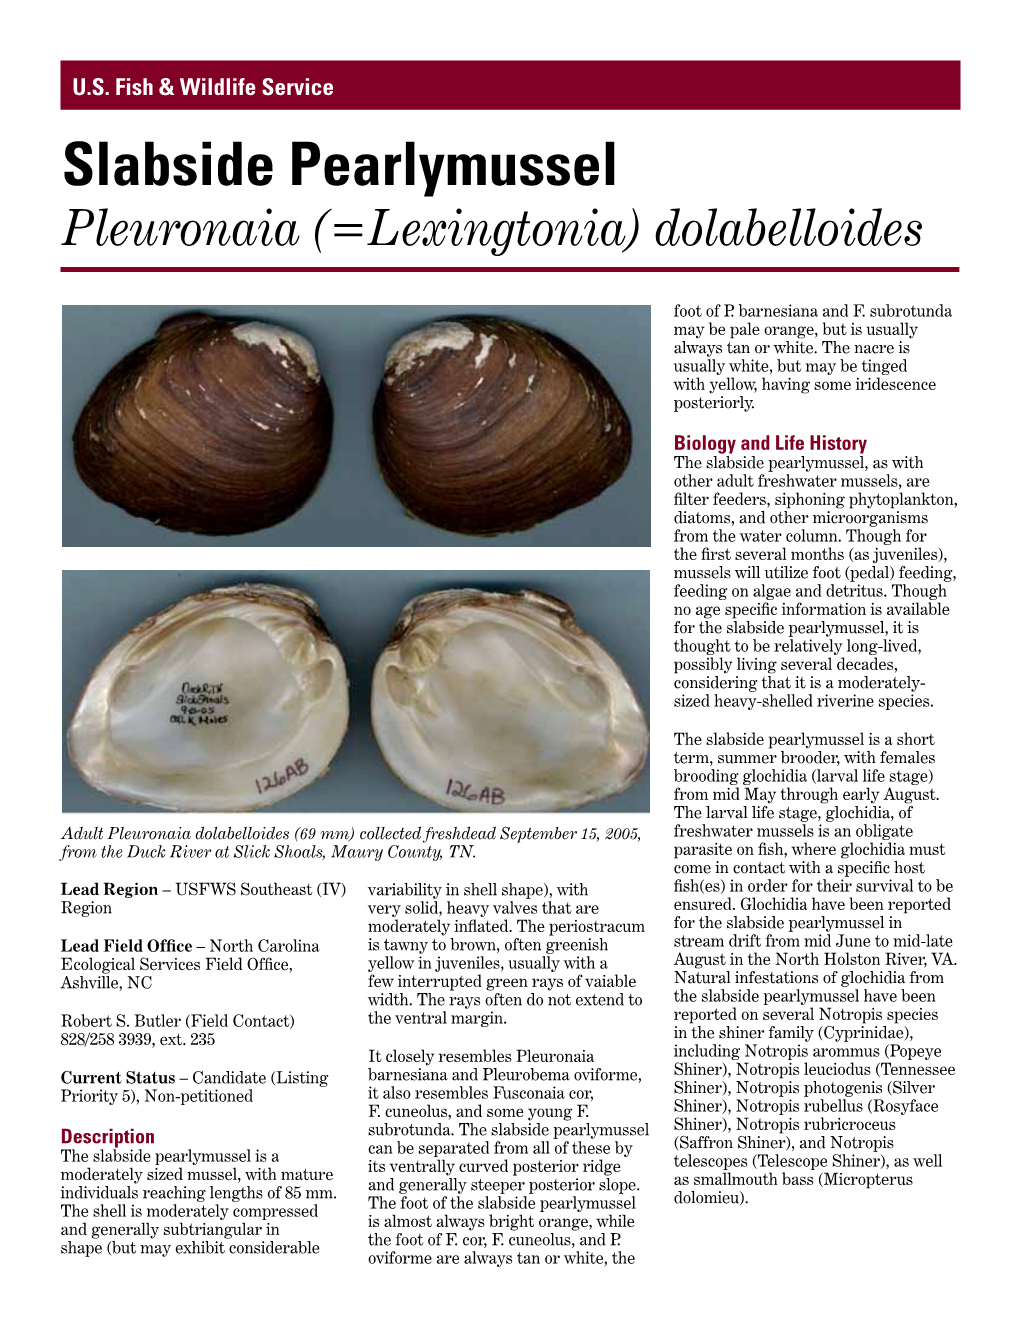 Slabside Pearlymussel Pleuronaia (=Lexingtonia) Dolabelloides